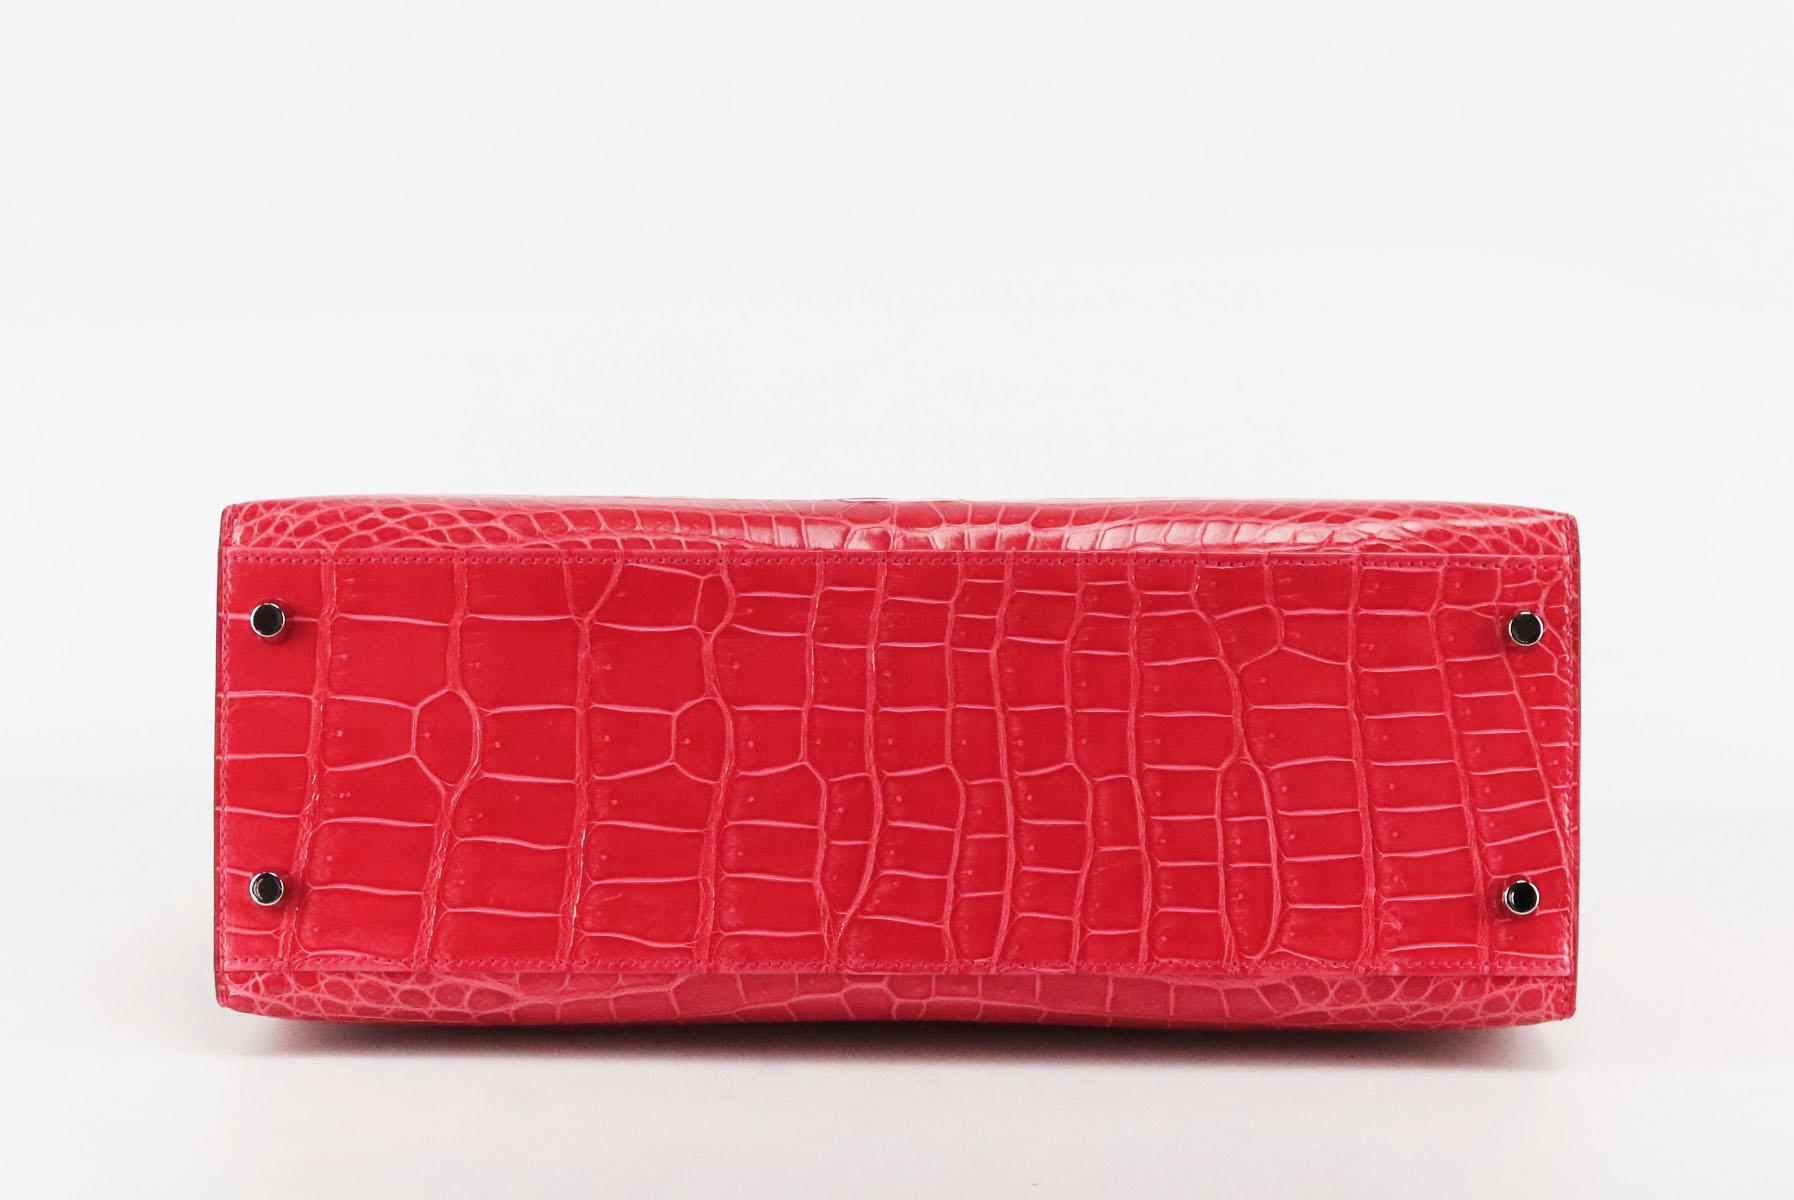 Hermès 2015 Kelly Sellier 32cm Porosus Crocodile Leather Bag For Sale 3